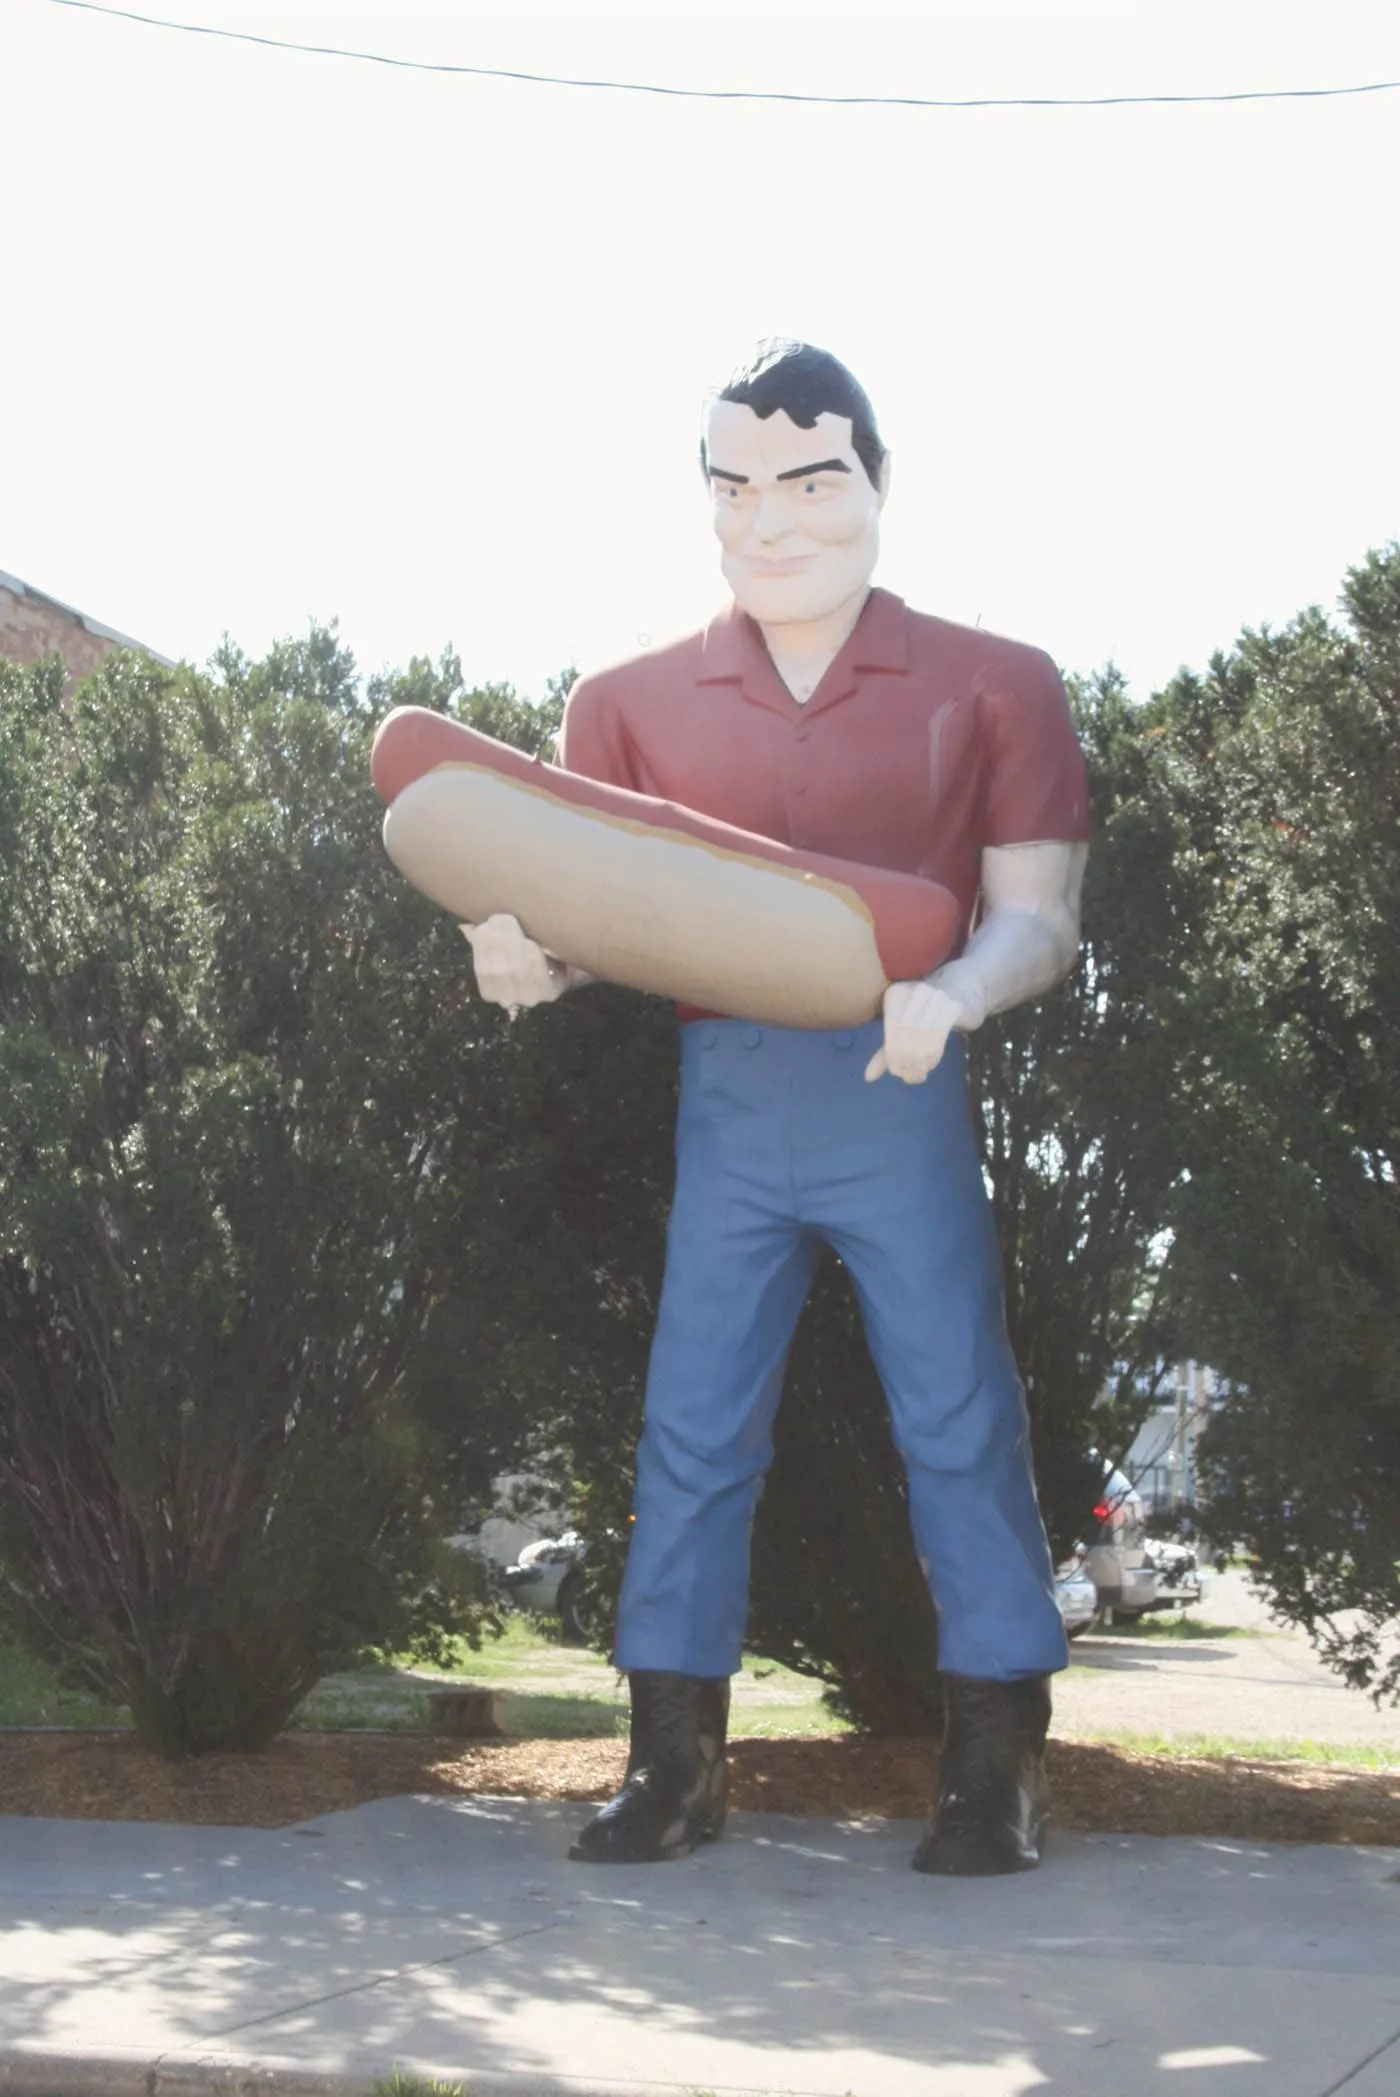  Muffler Man Holding a Hot Dog in Atlanta, Illinois. A Paul Bunyan Statue on Route 66.